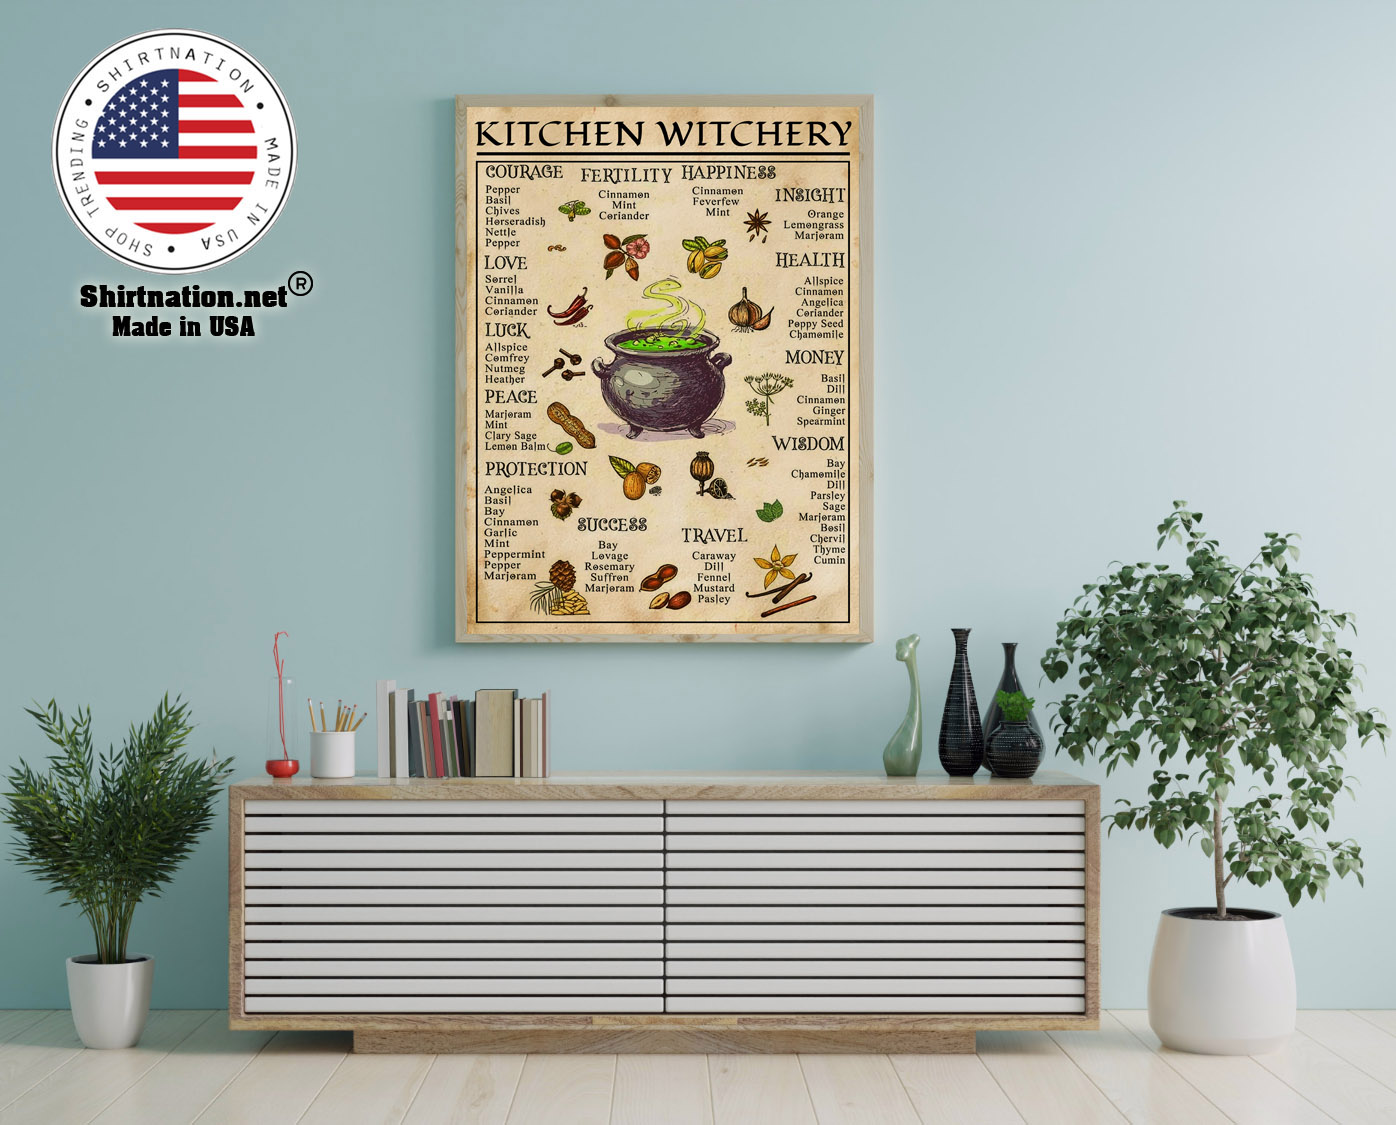 Kitchen witchery poster 12